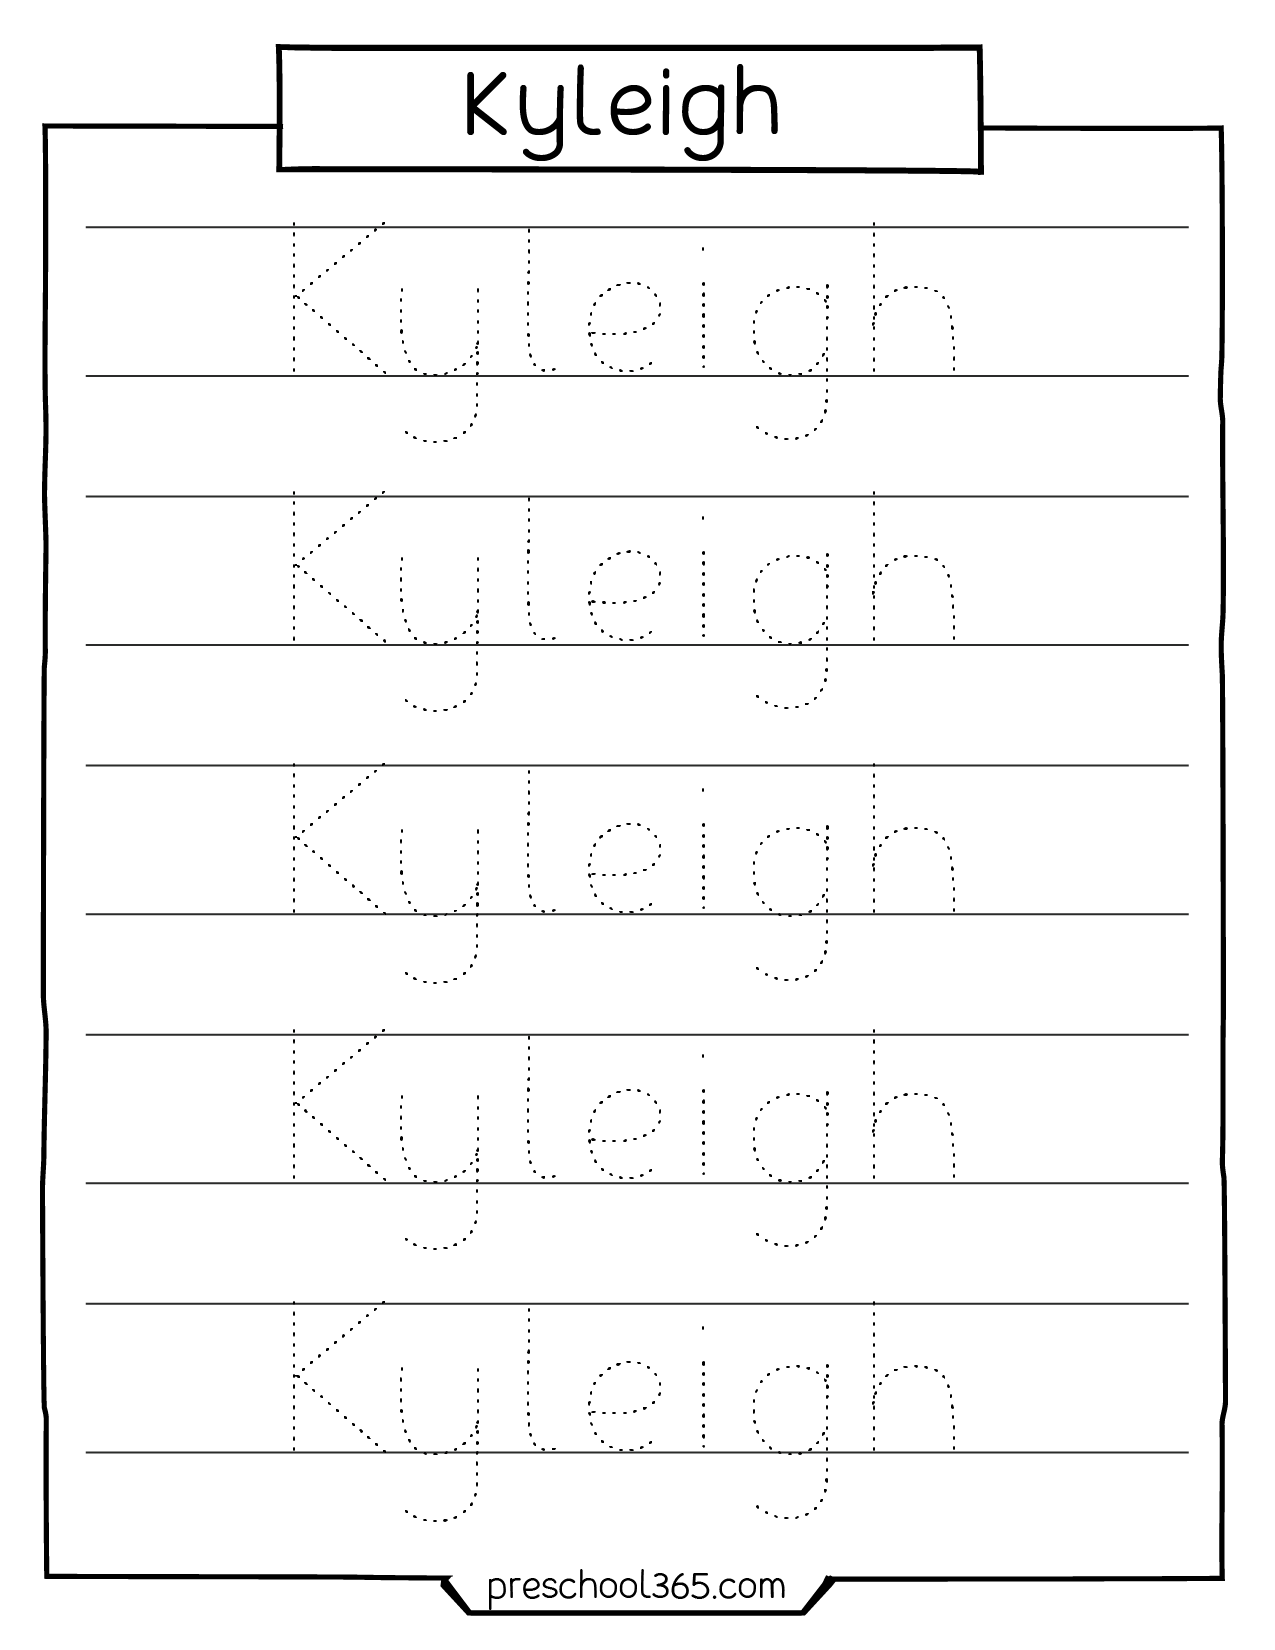 Preschool name tracing sheets kyleigh s Preschool365